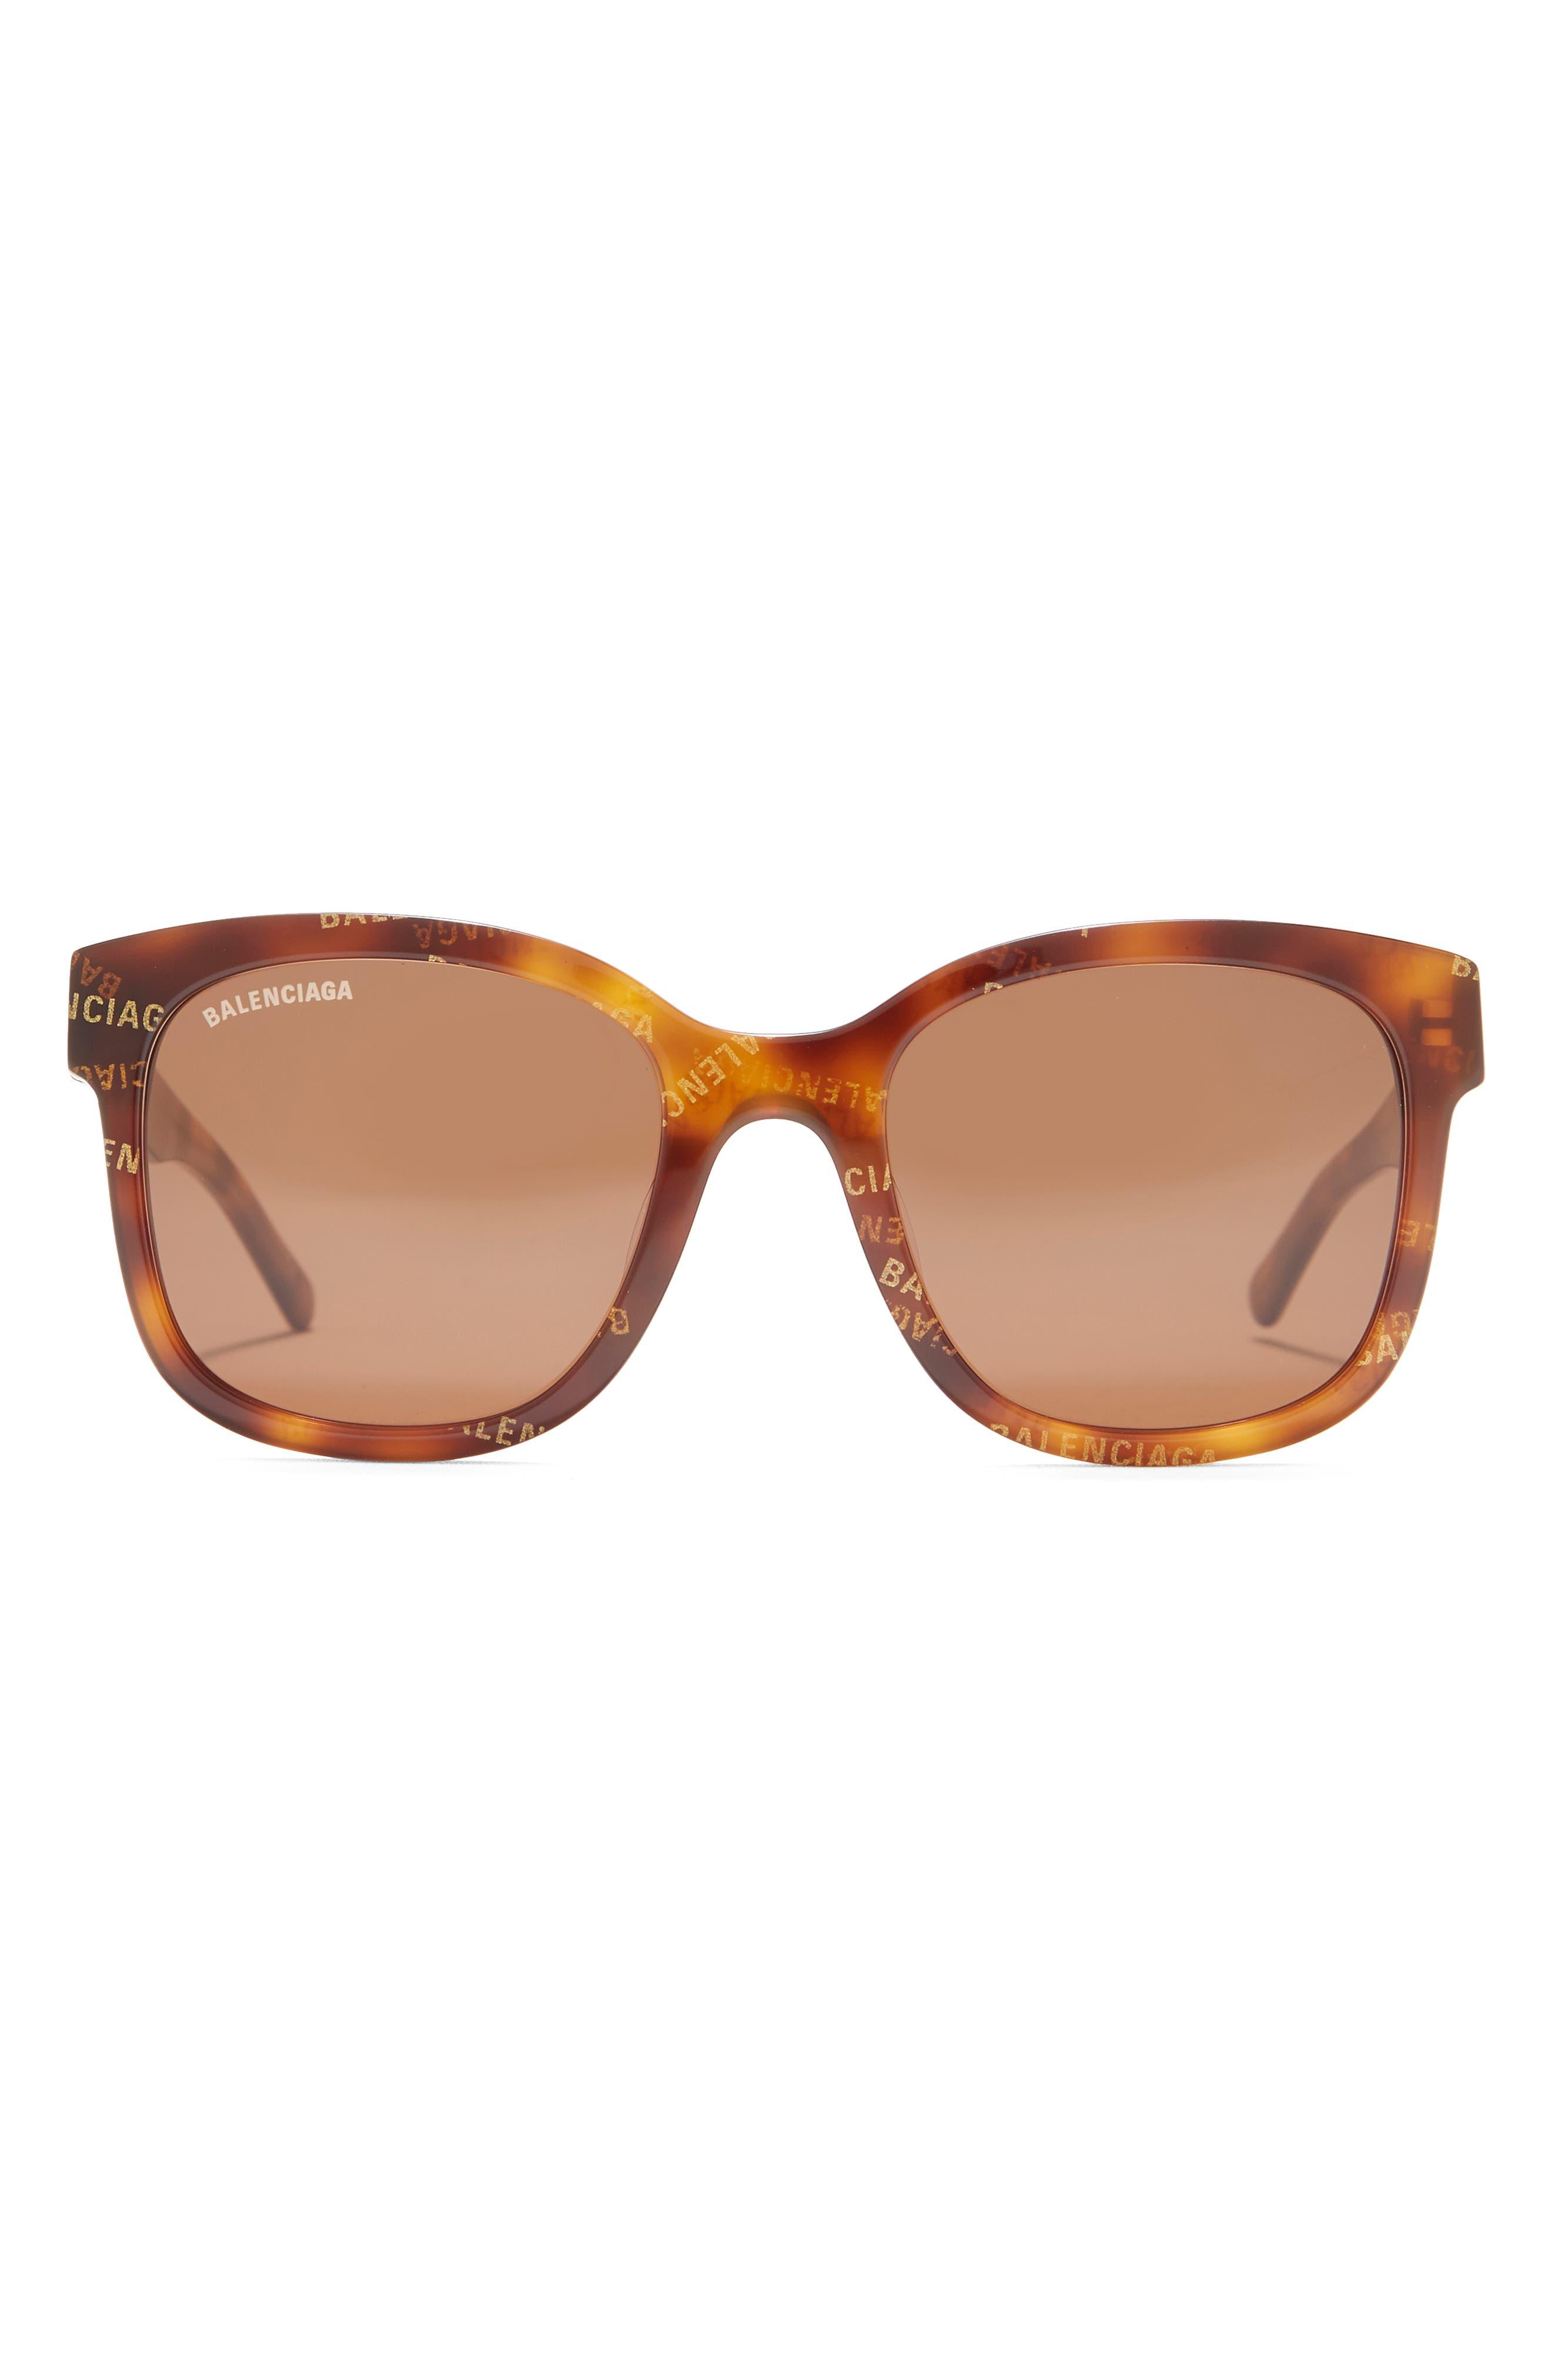 Balenciaga 52mm Square Rectangle Sunglasses in Brown | Lyst